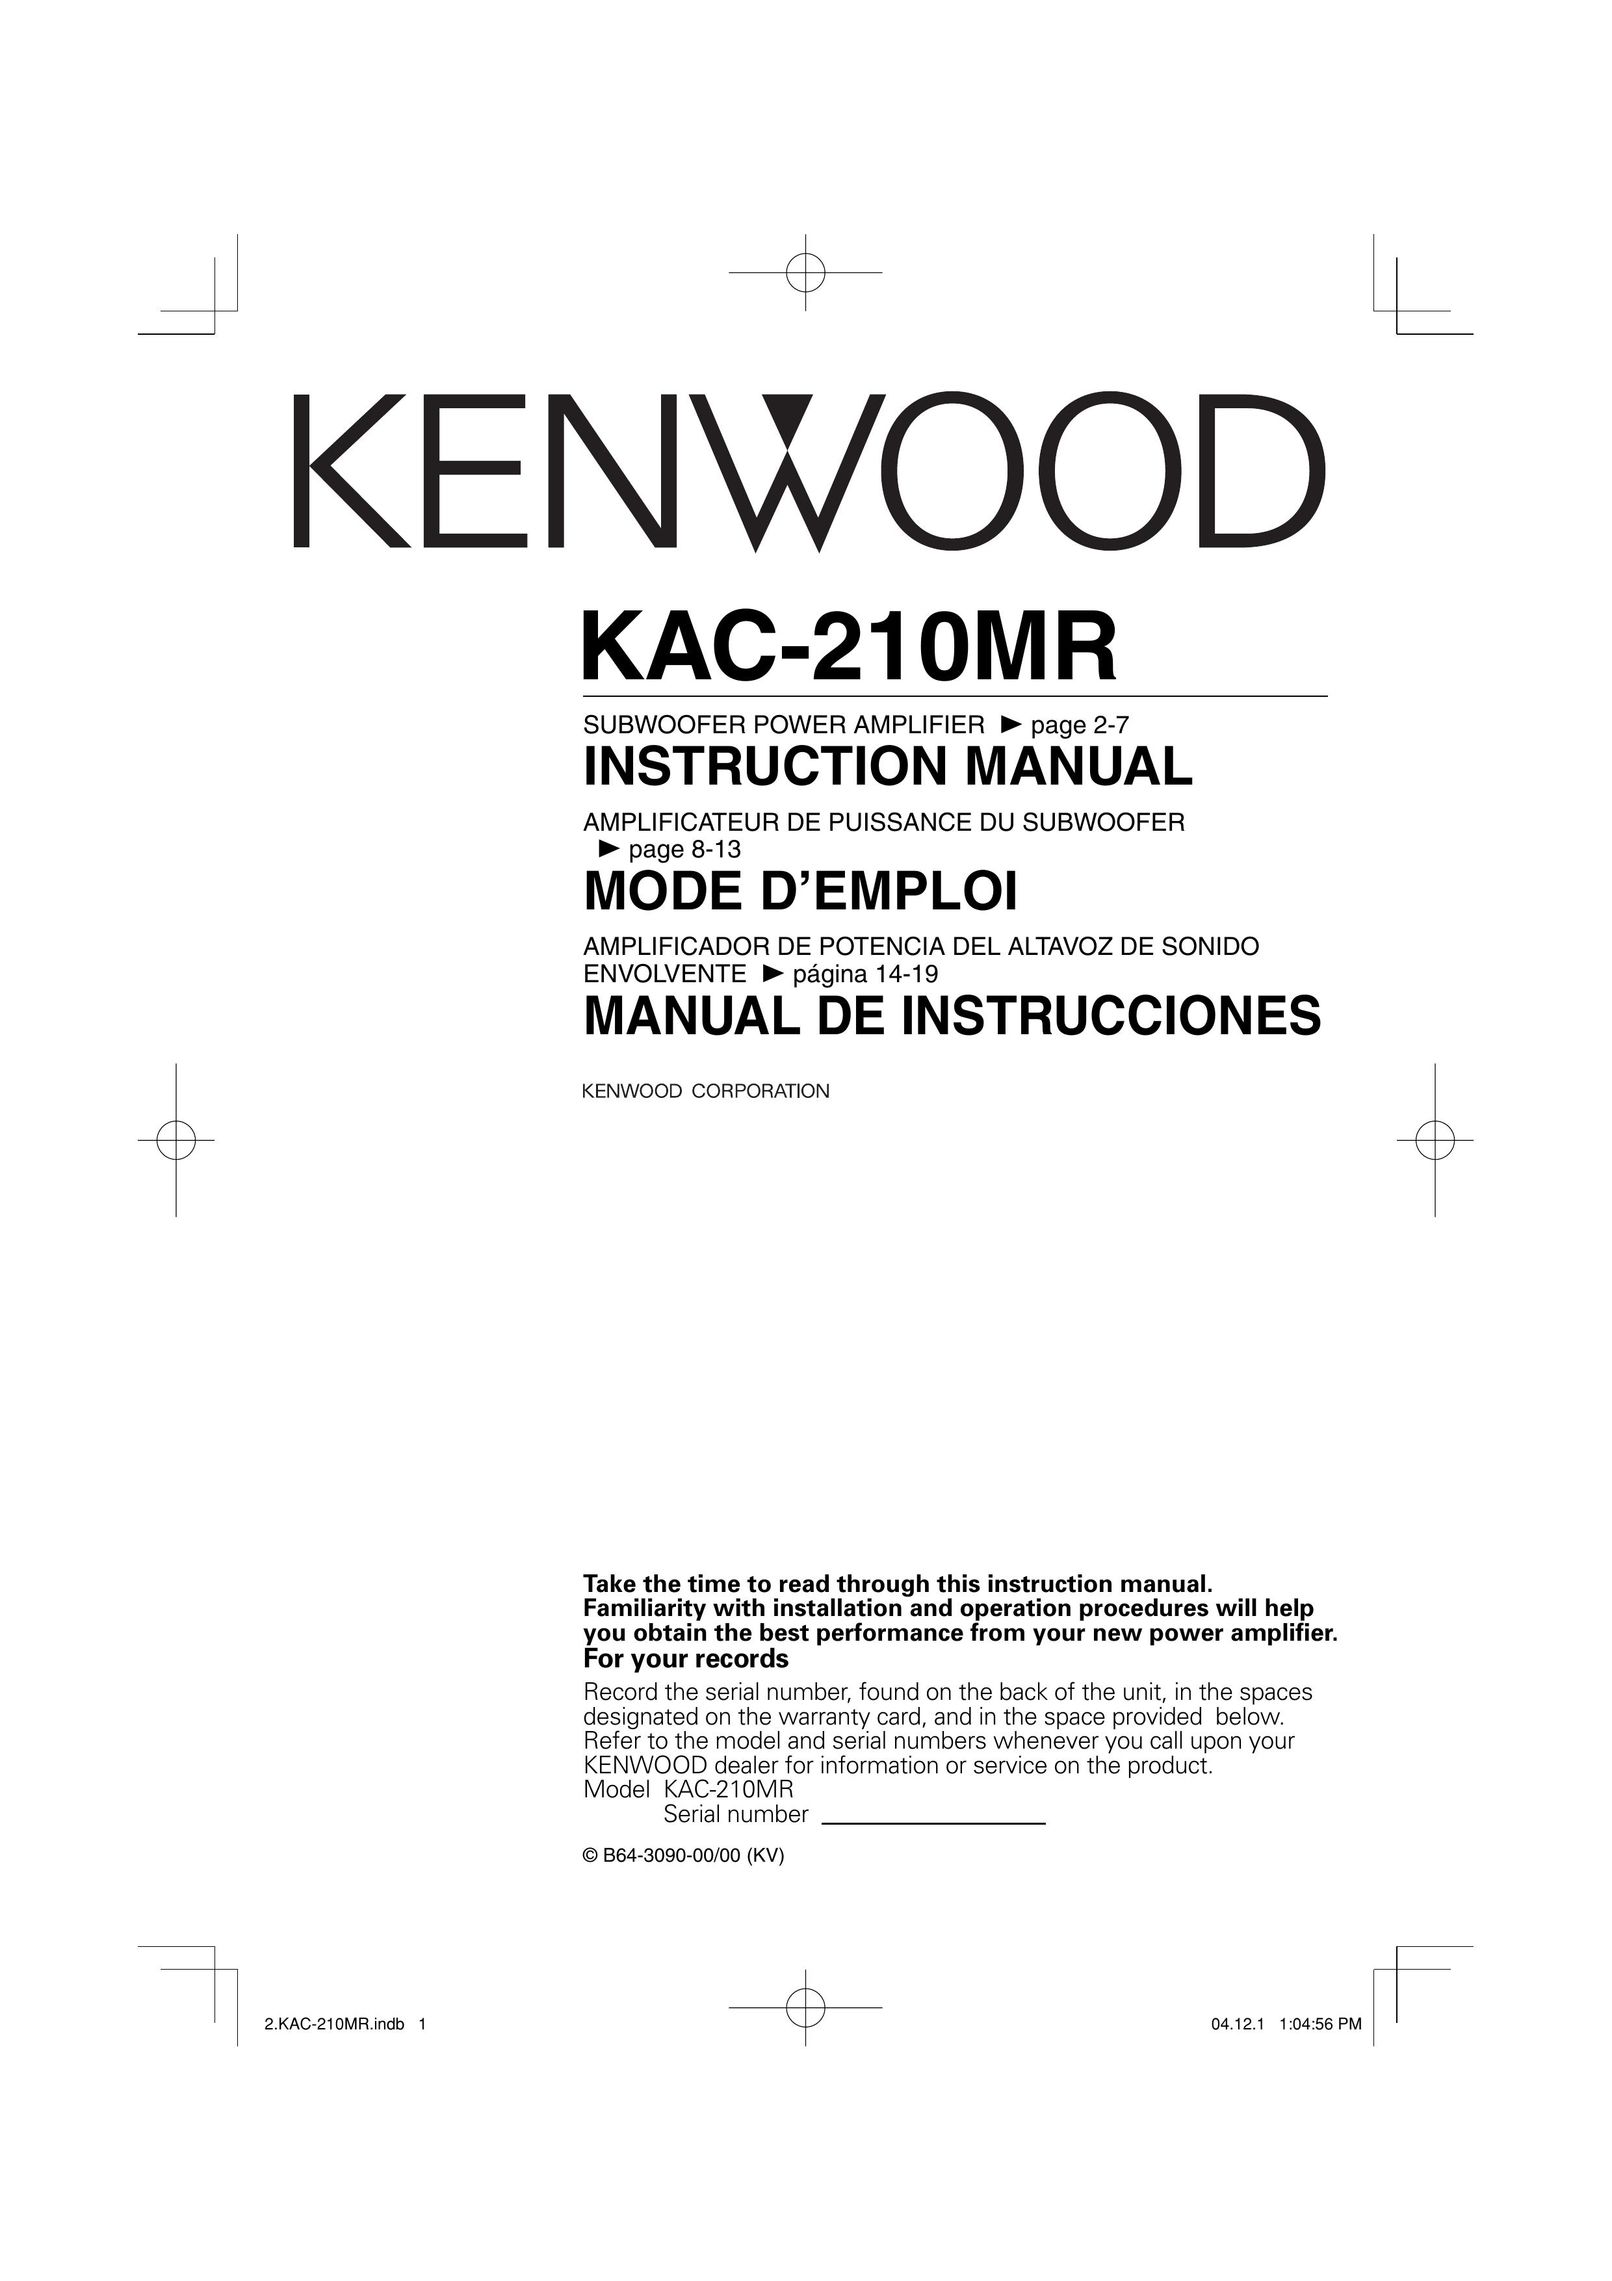 Kenwood KAC-210MR Stereo Amplifier User Manual